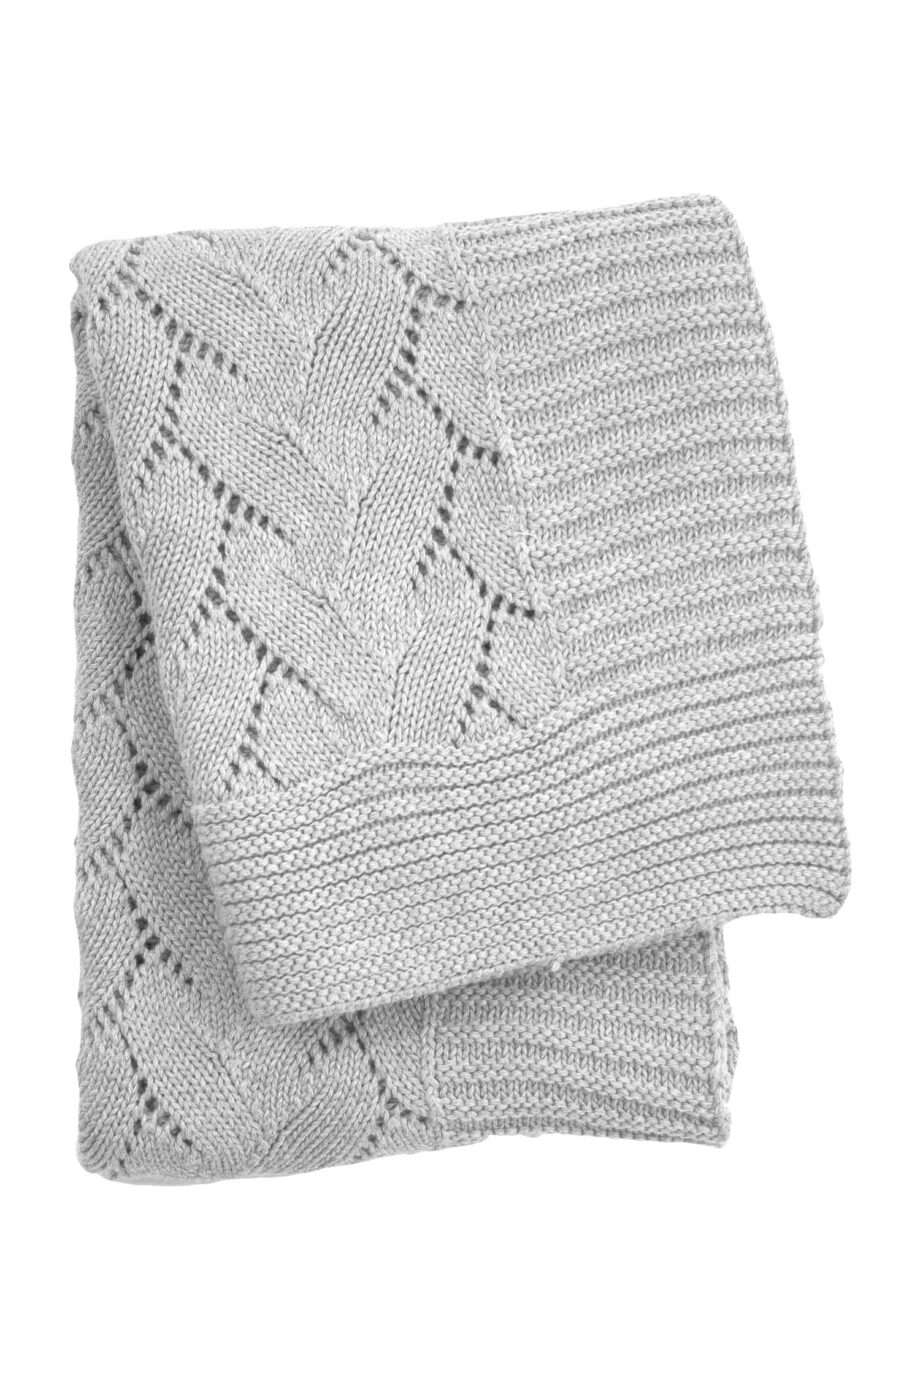 ajoure lilly white knitted cotton little blanket medium